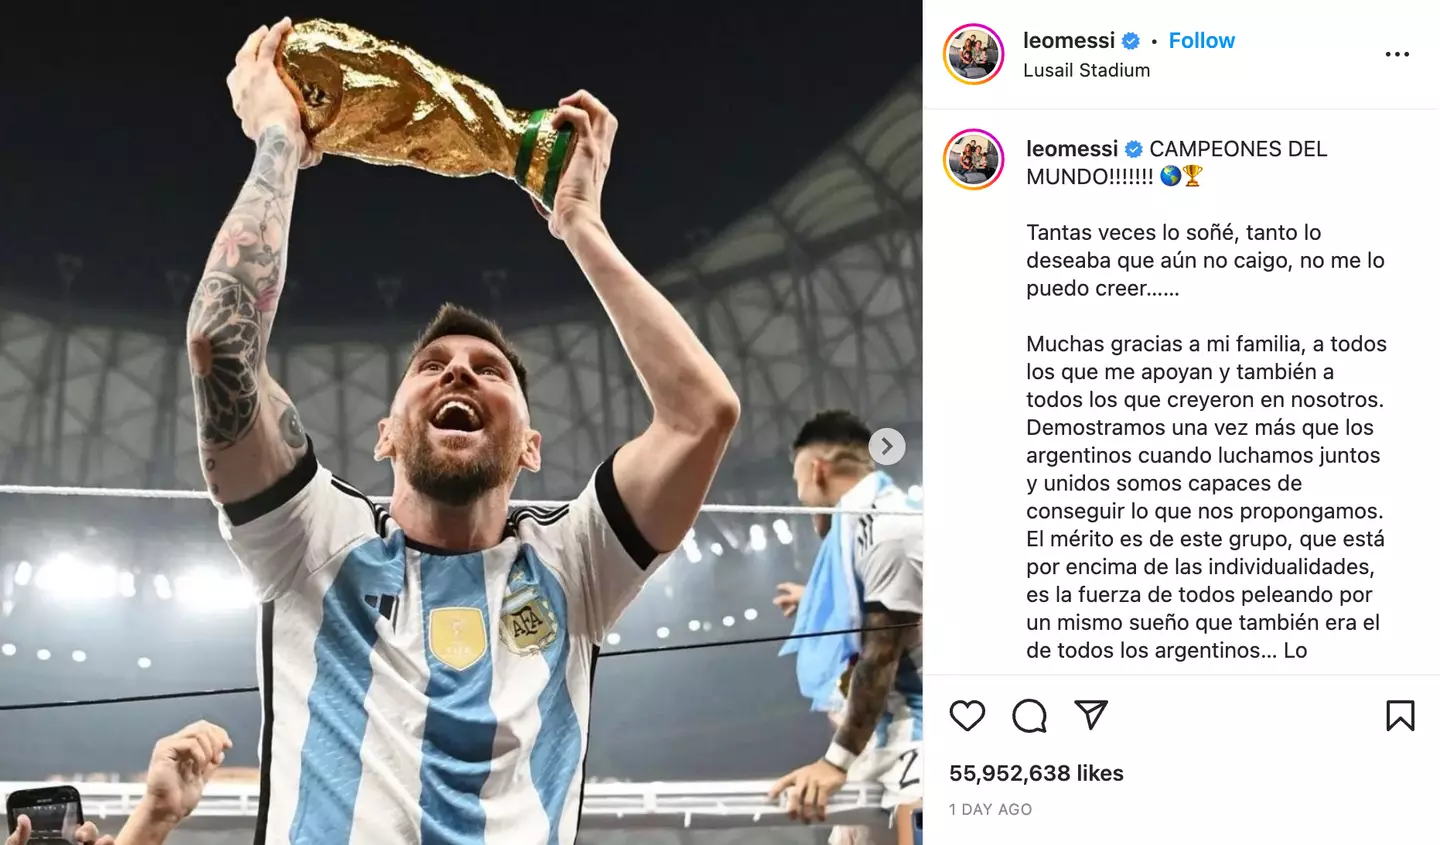 Messi's post on Instagram. (Image